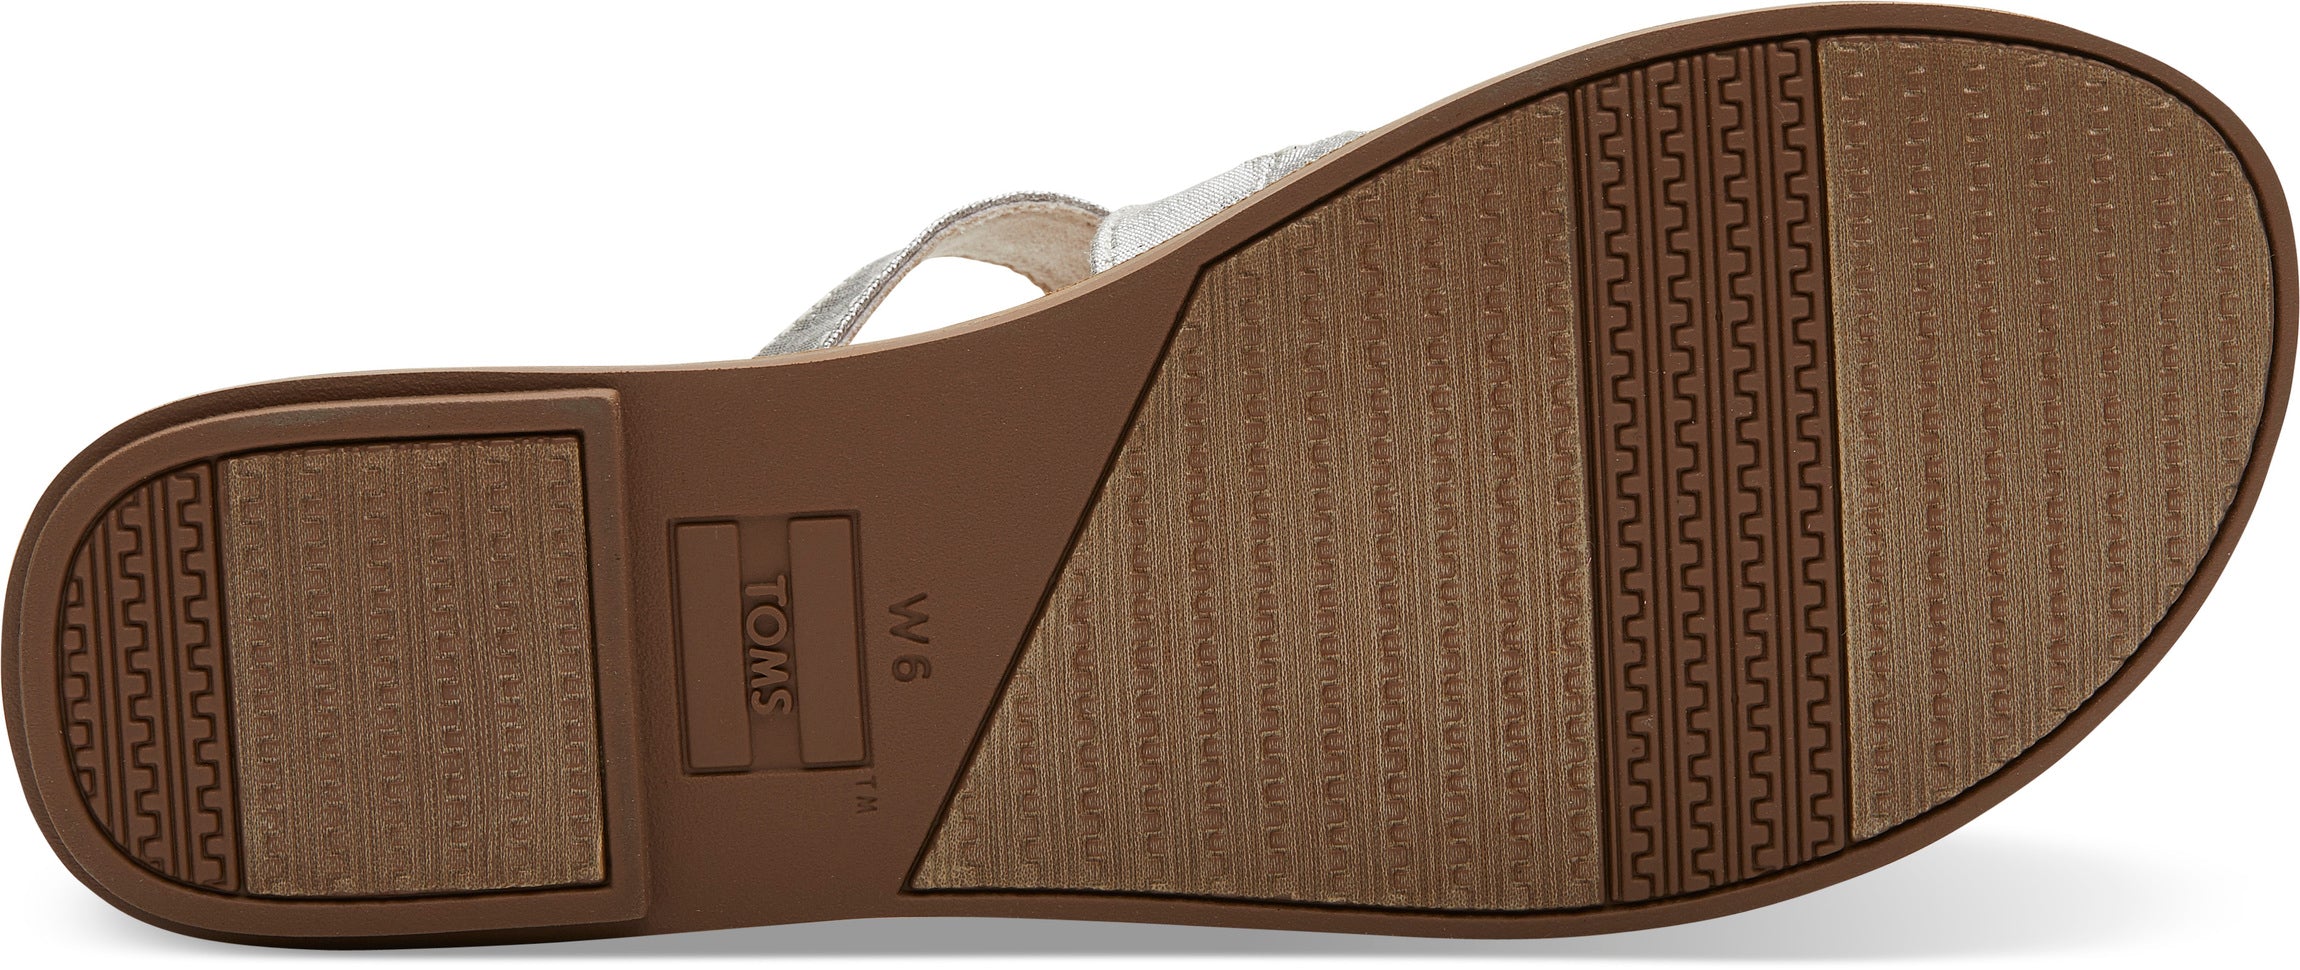 Dámske strieborné sandálky TOMS Silver Metallic Sicily Sandals